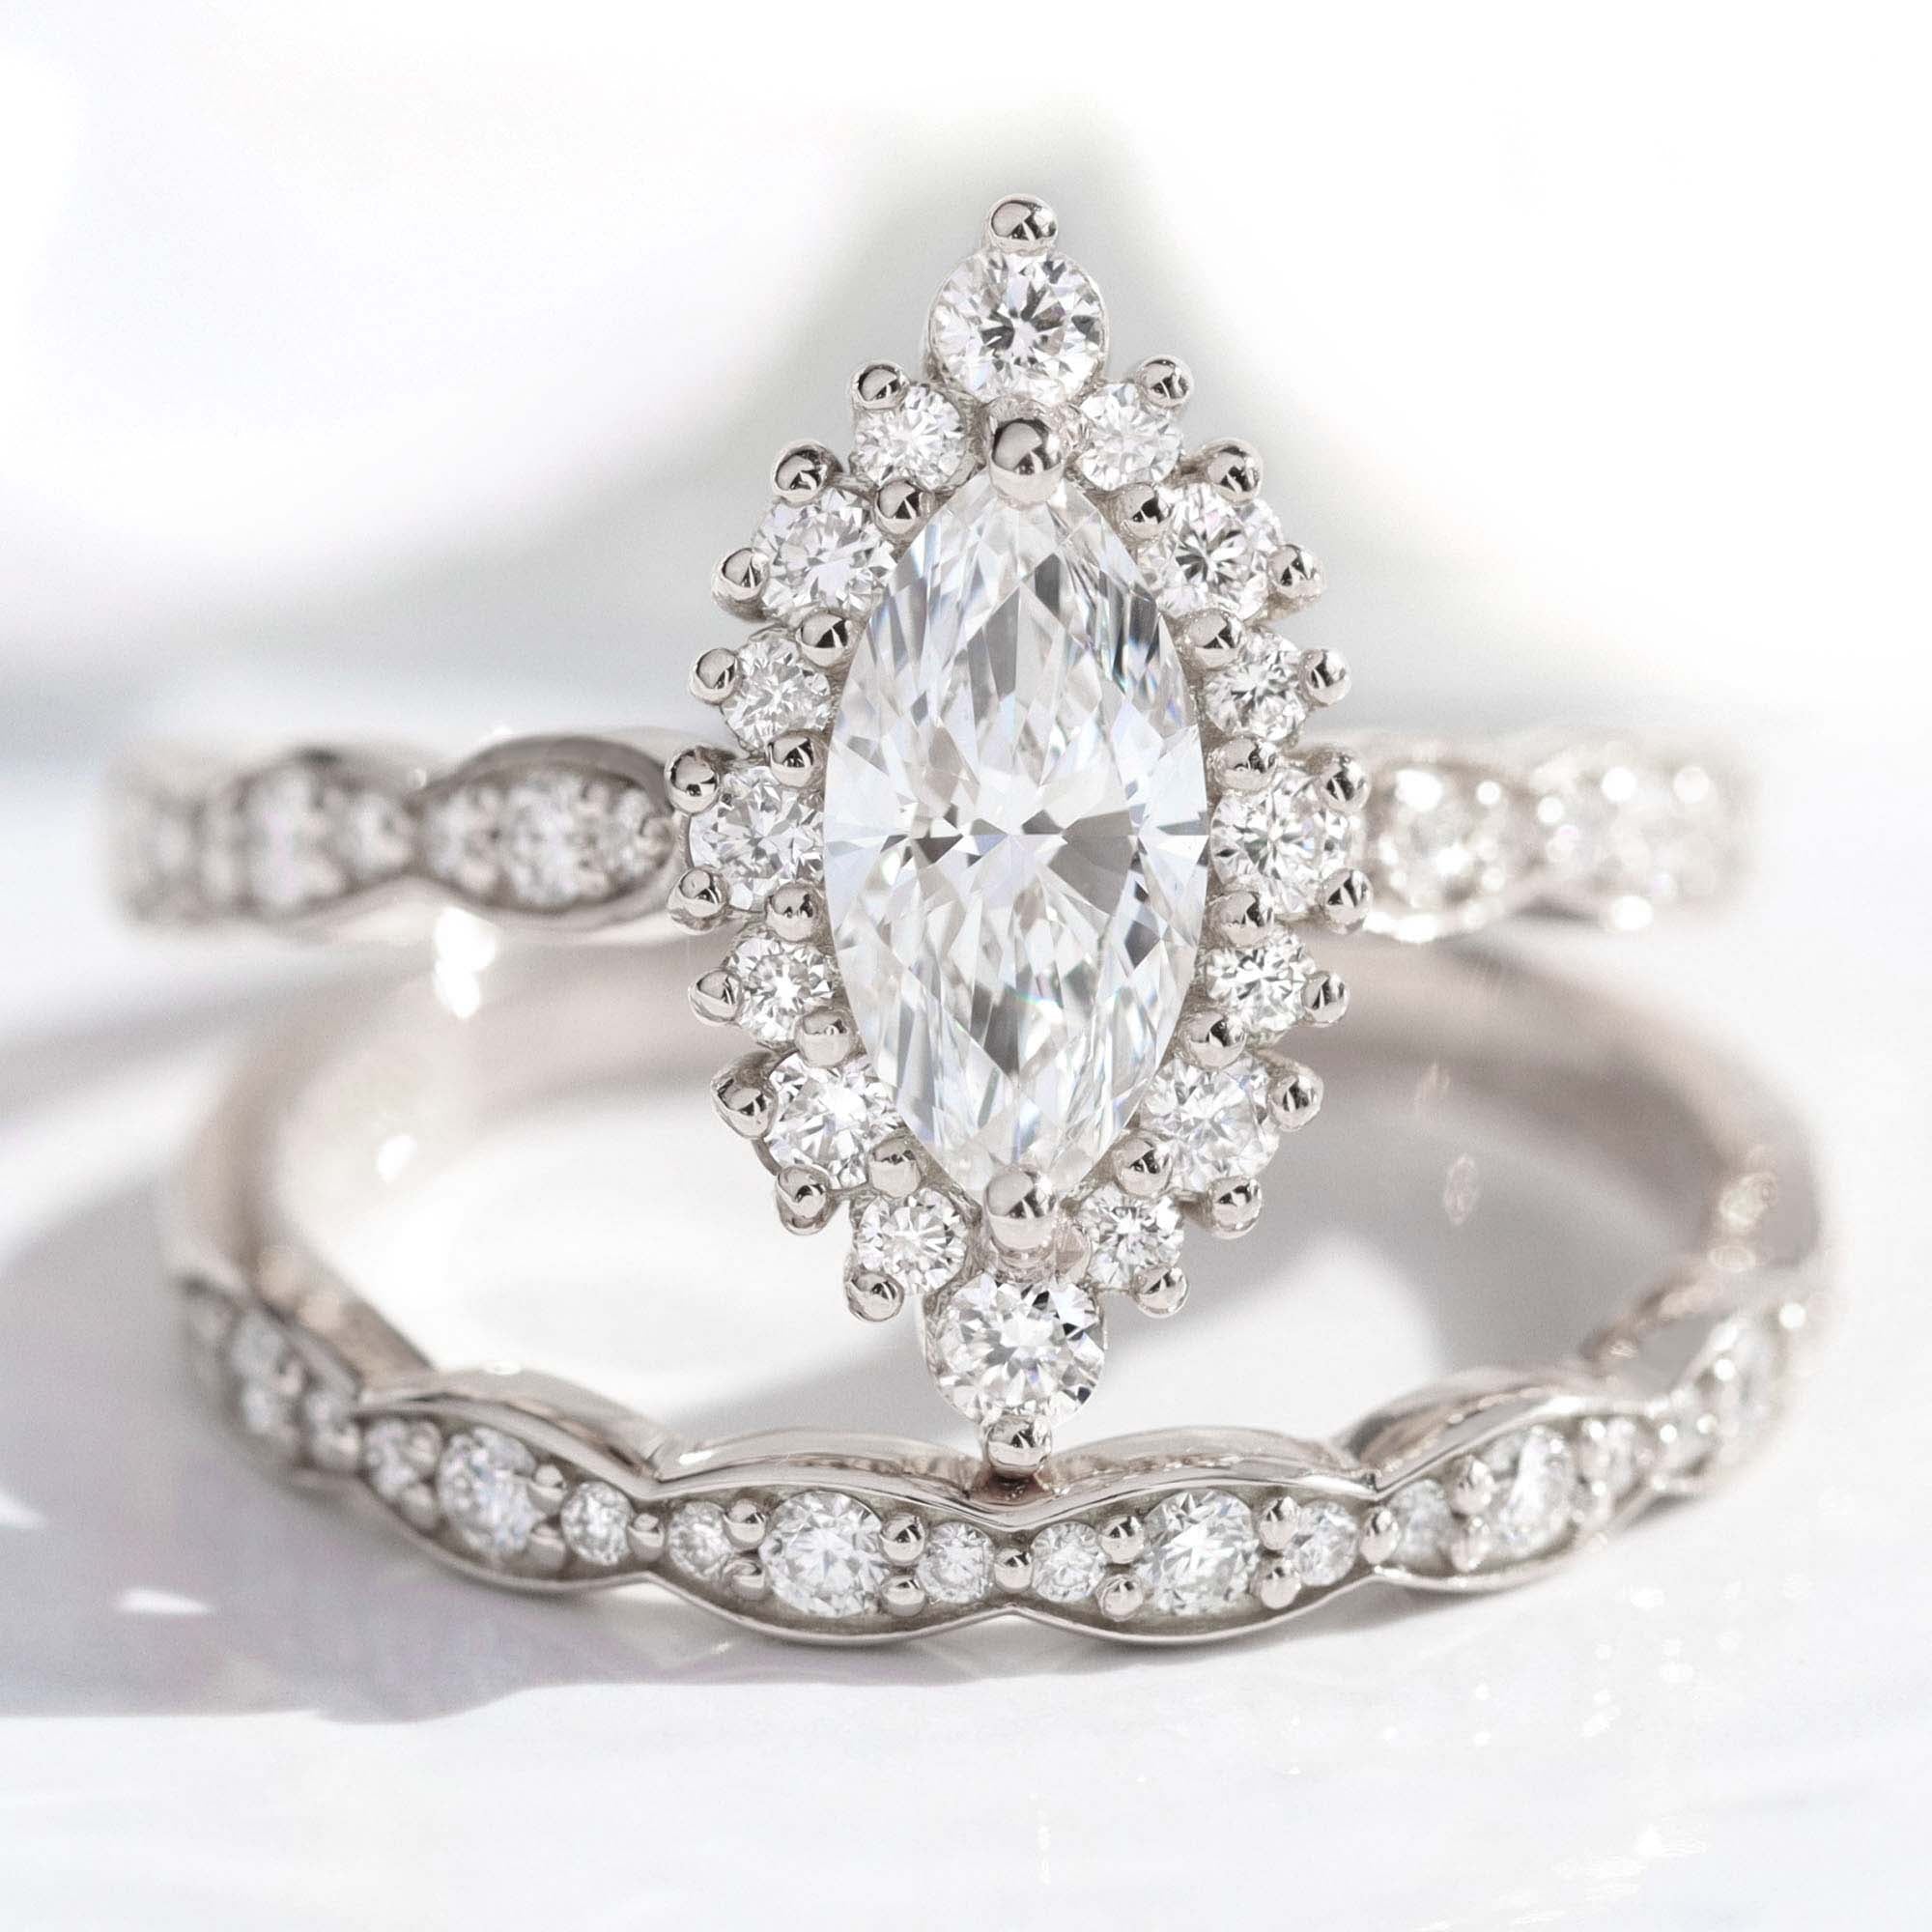 lab diamond ring stack white gold marquise diamond halo engagement ring set La More Design Jewelry